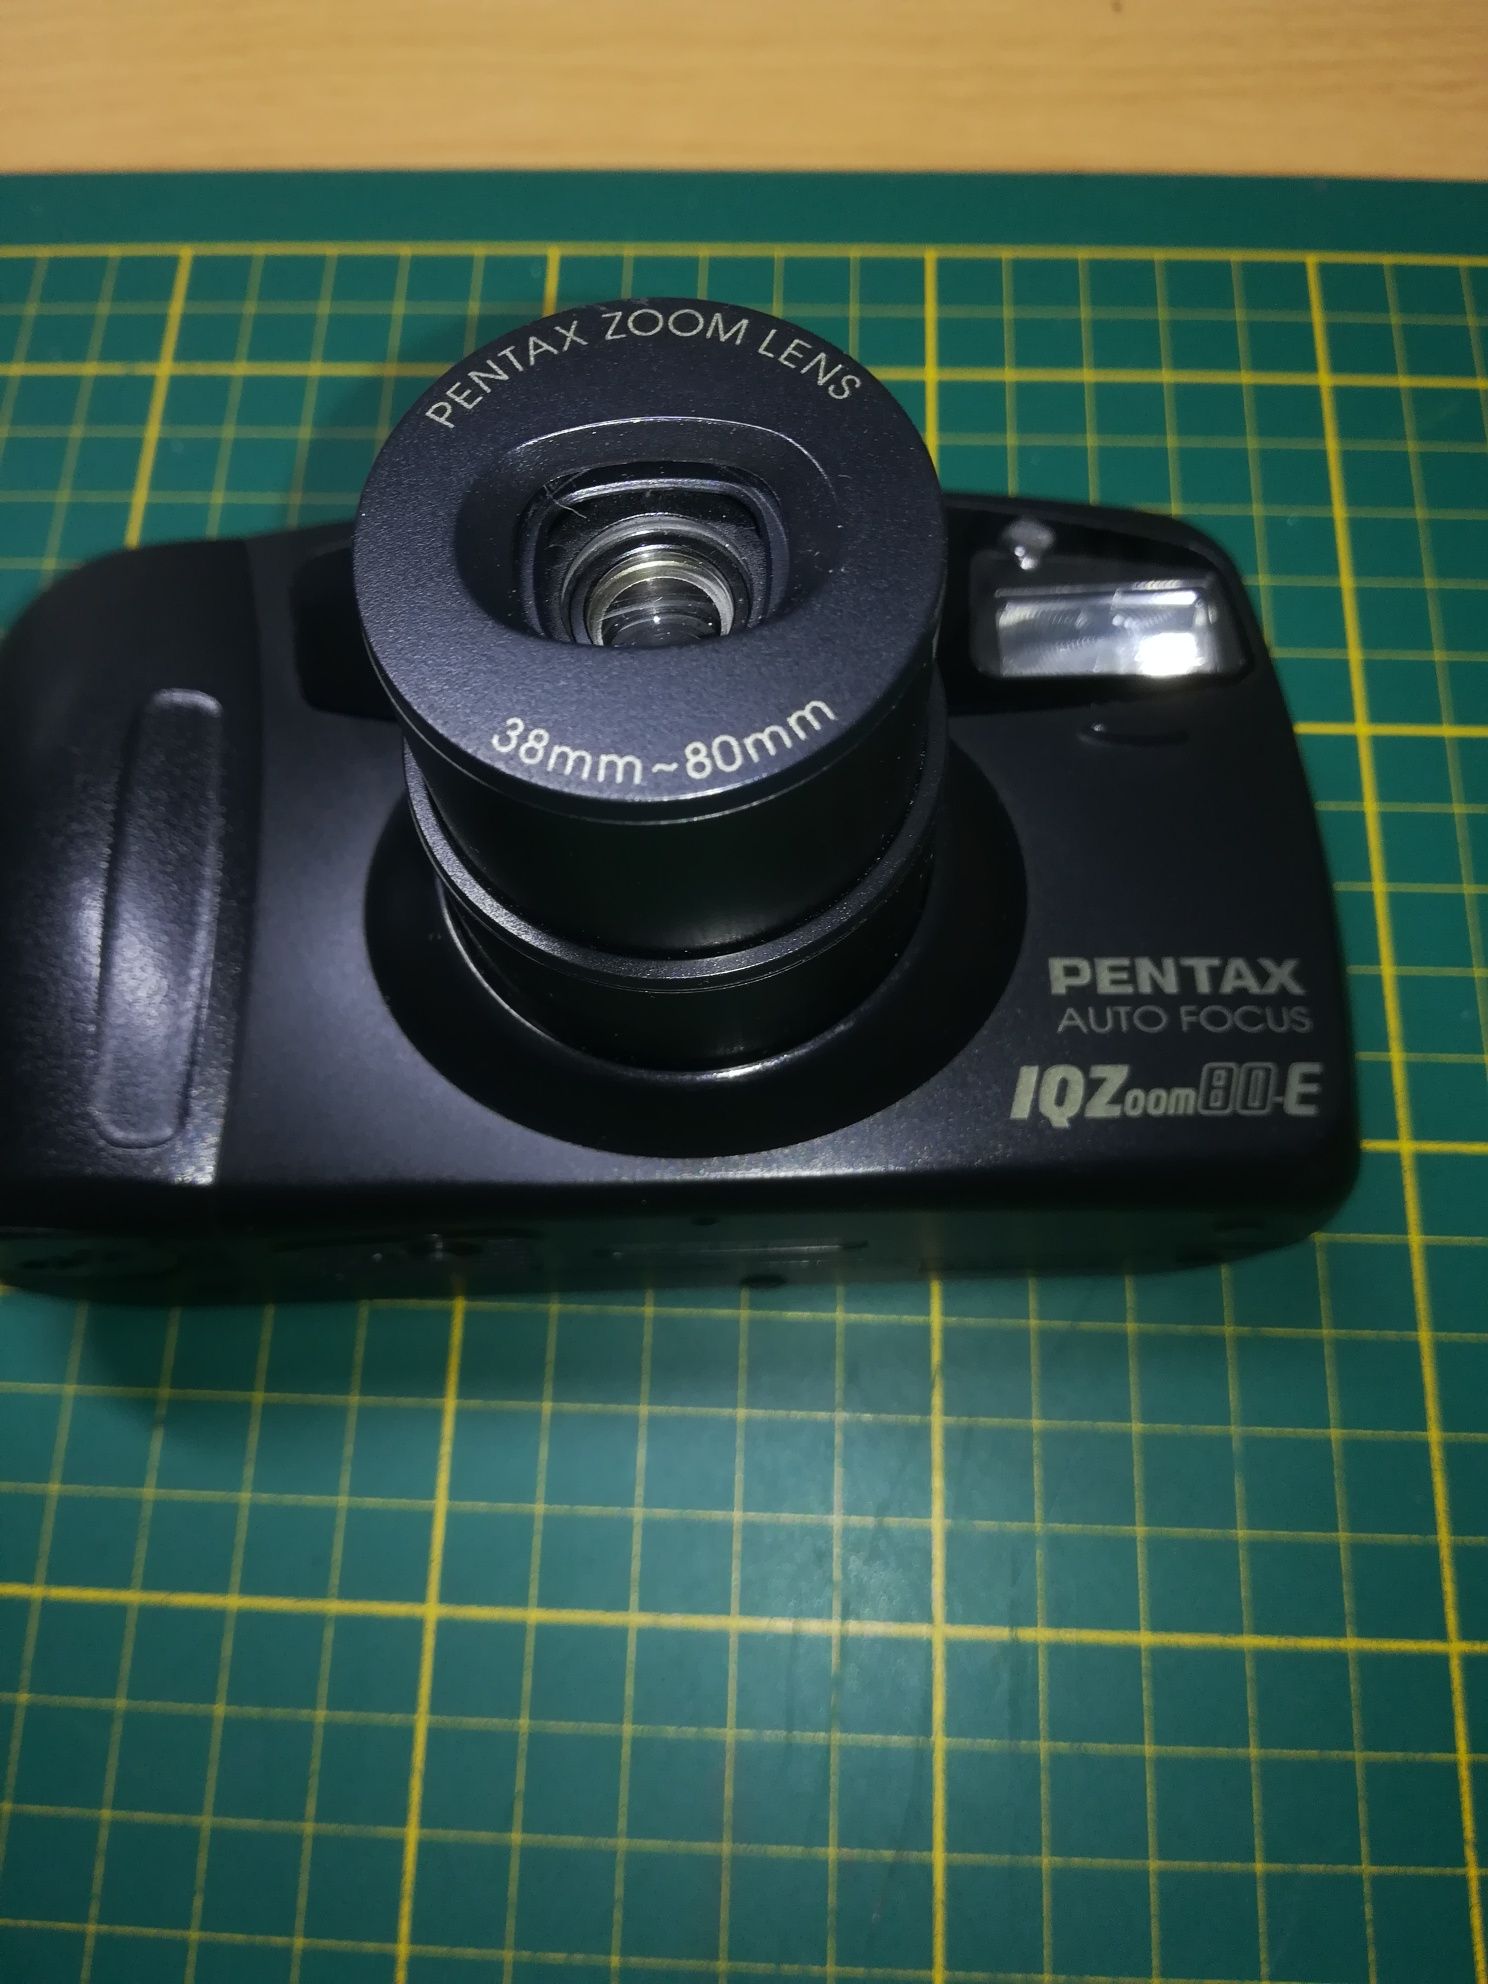 Aparat fotograficzny Pentax Autofocus IQZoom80-E